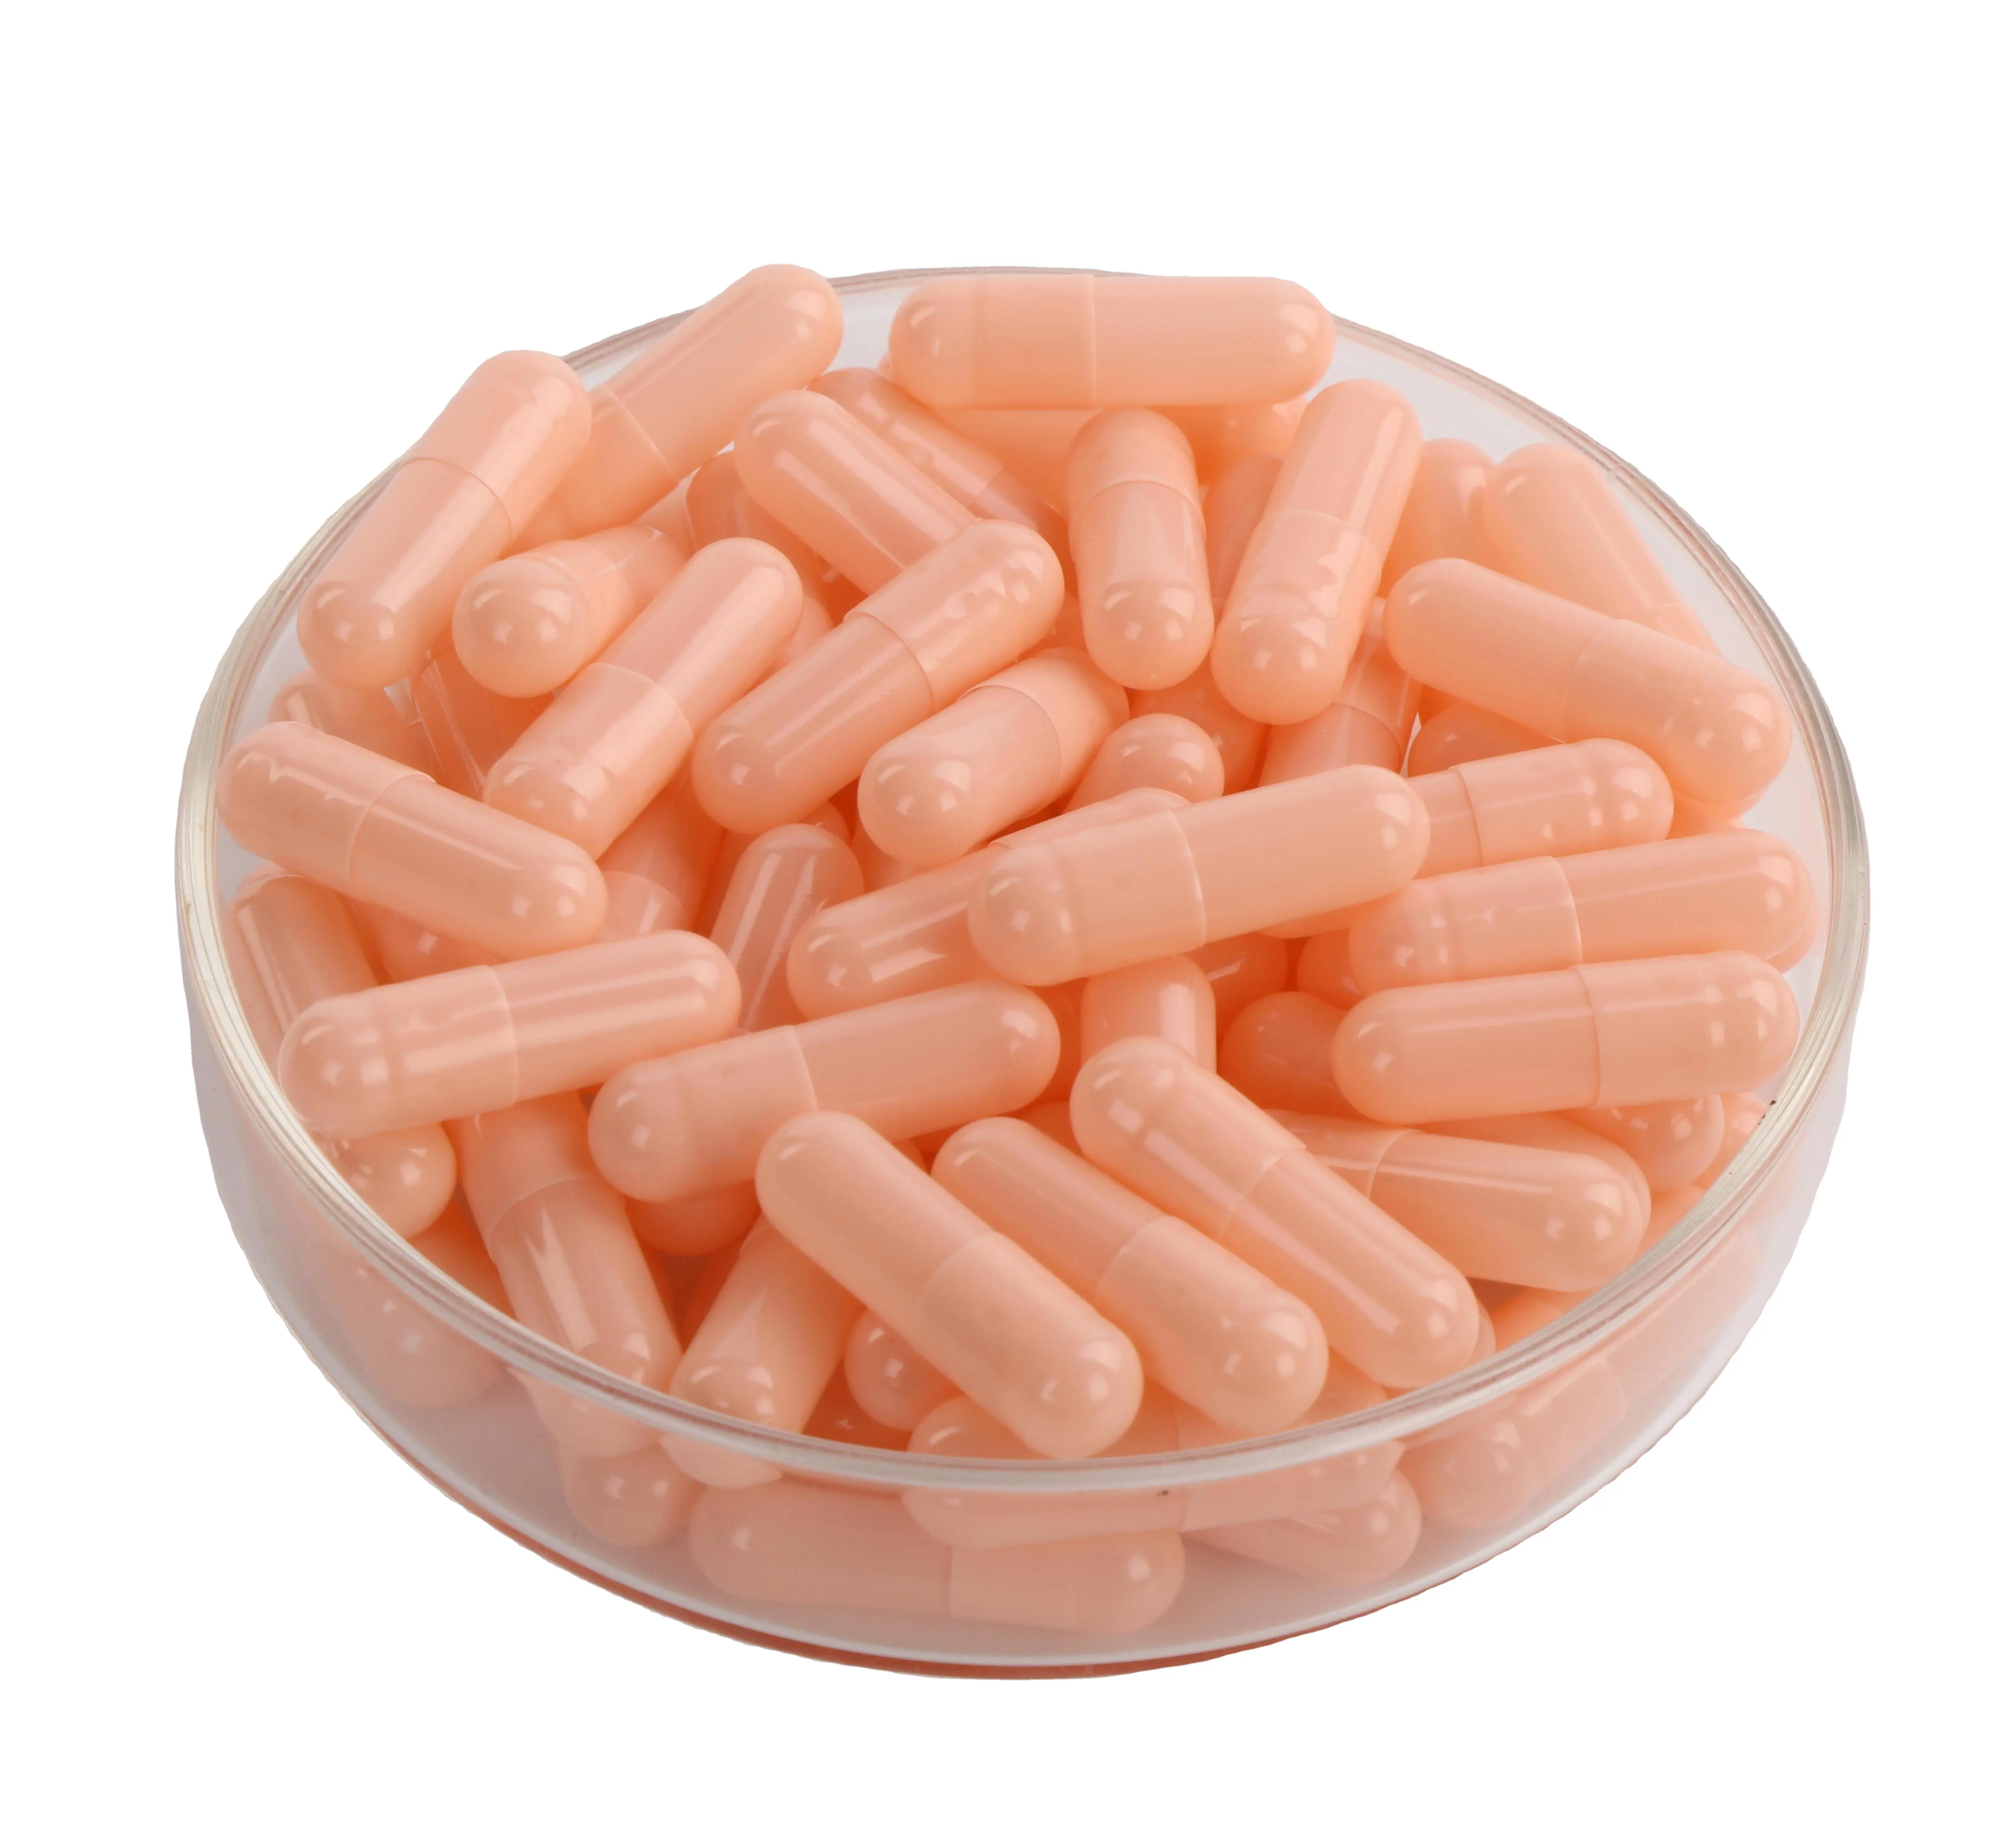 KANGKE qualità farmaceutica 100% colla ossea capsula di gelatina, capsula vuota, capsula di gel, tutte le dimensioni, trasparente, bianco